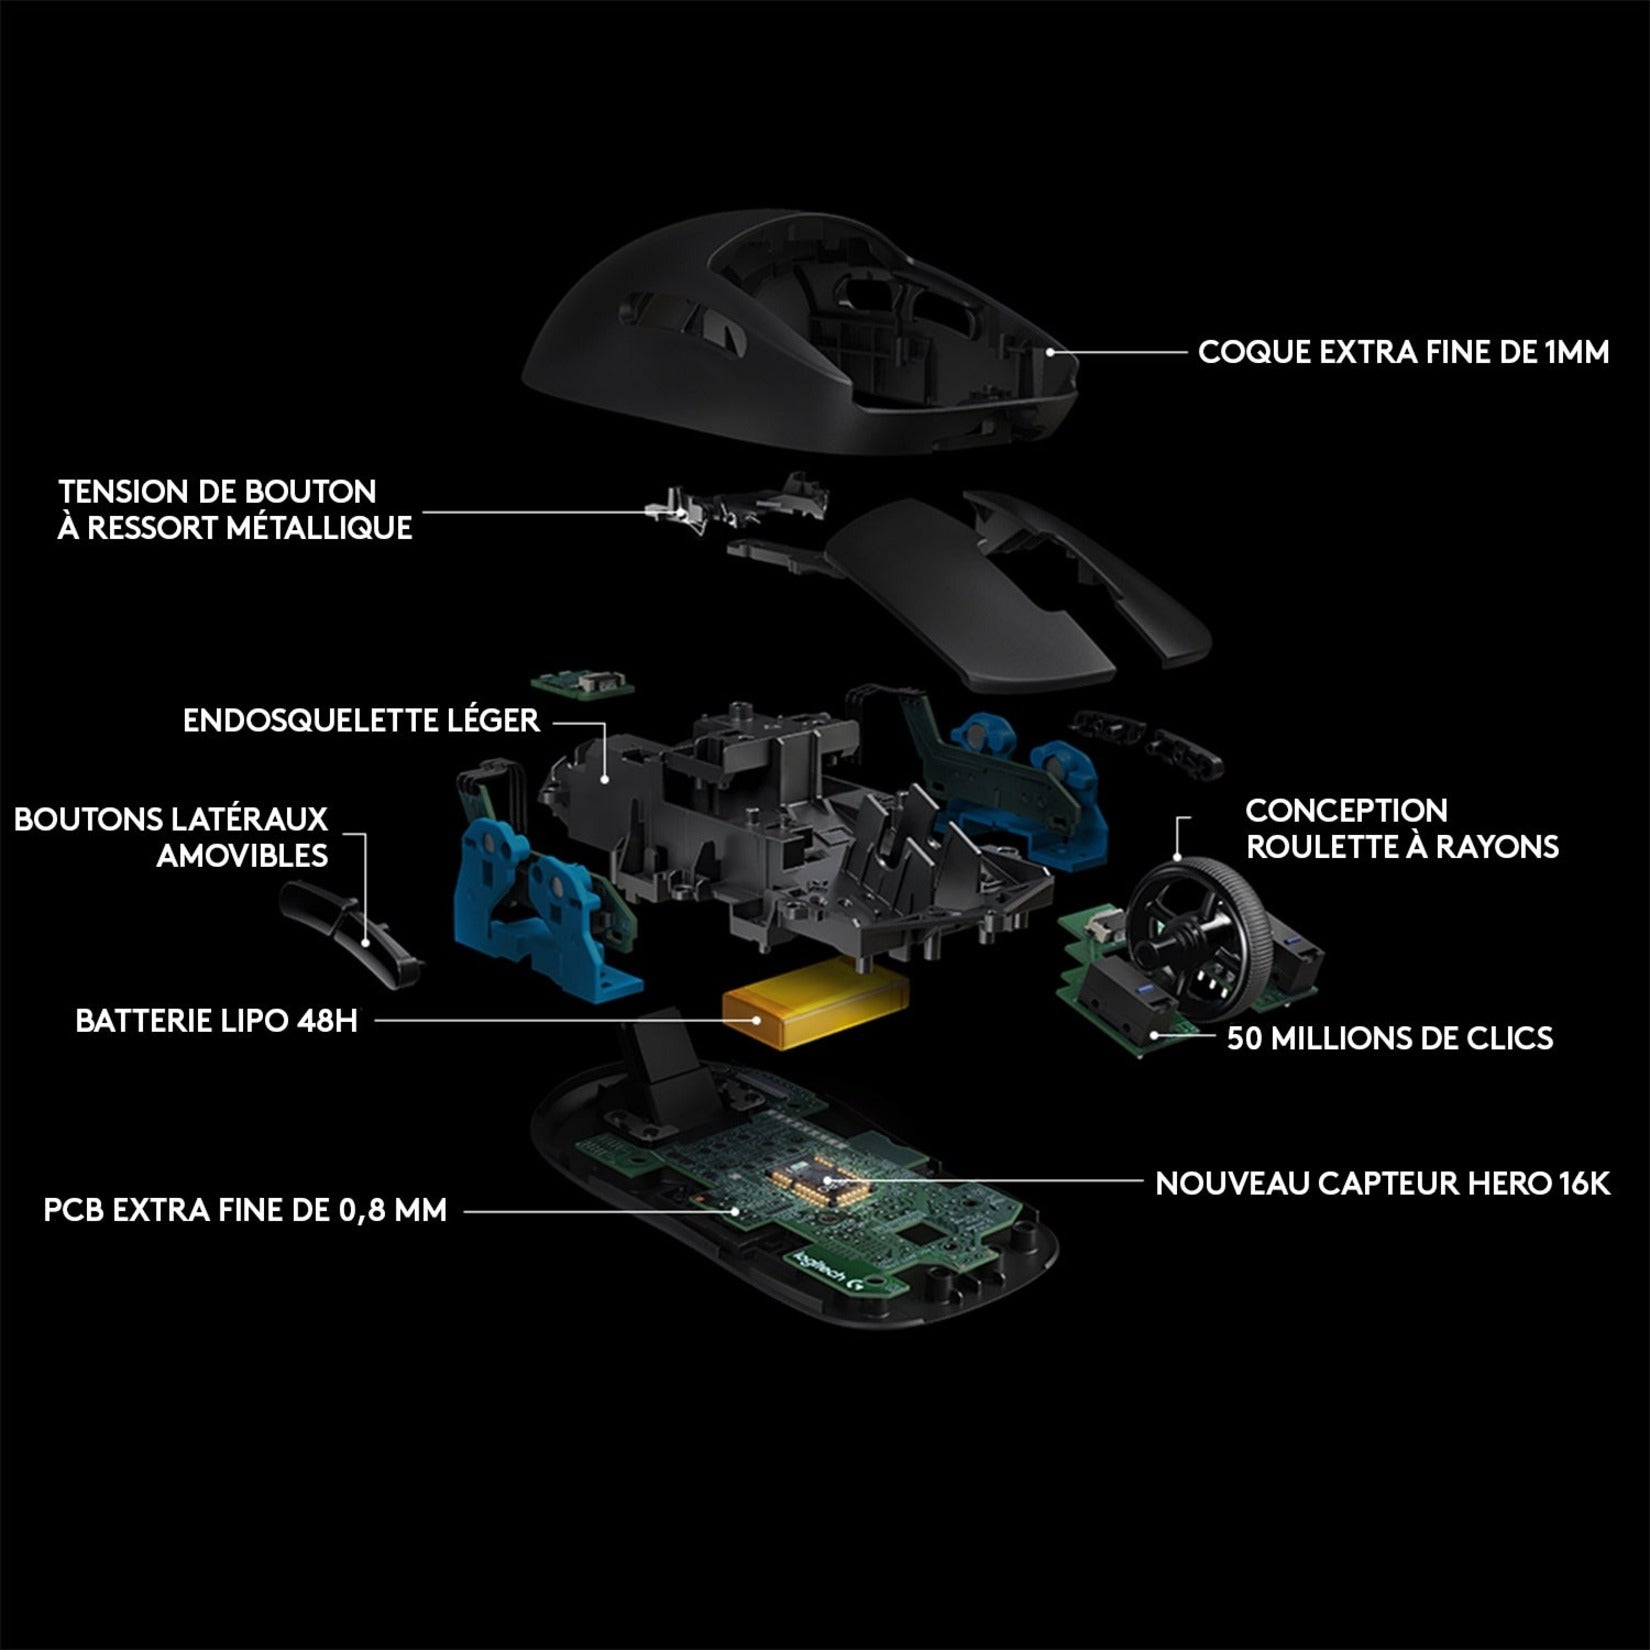 Logitech 910-005270 Pro Wireless Gaming Mouse, Ergonomic Fit, 16000 dpi, 8 Buttons, USB